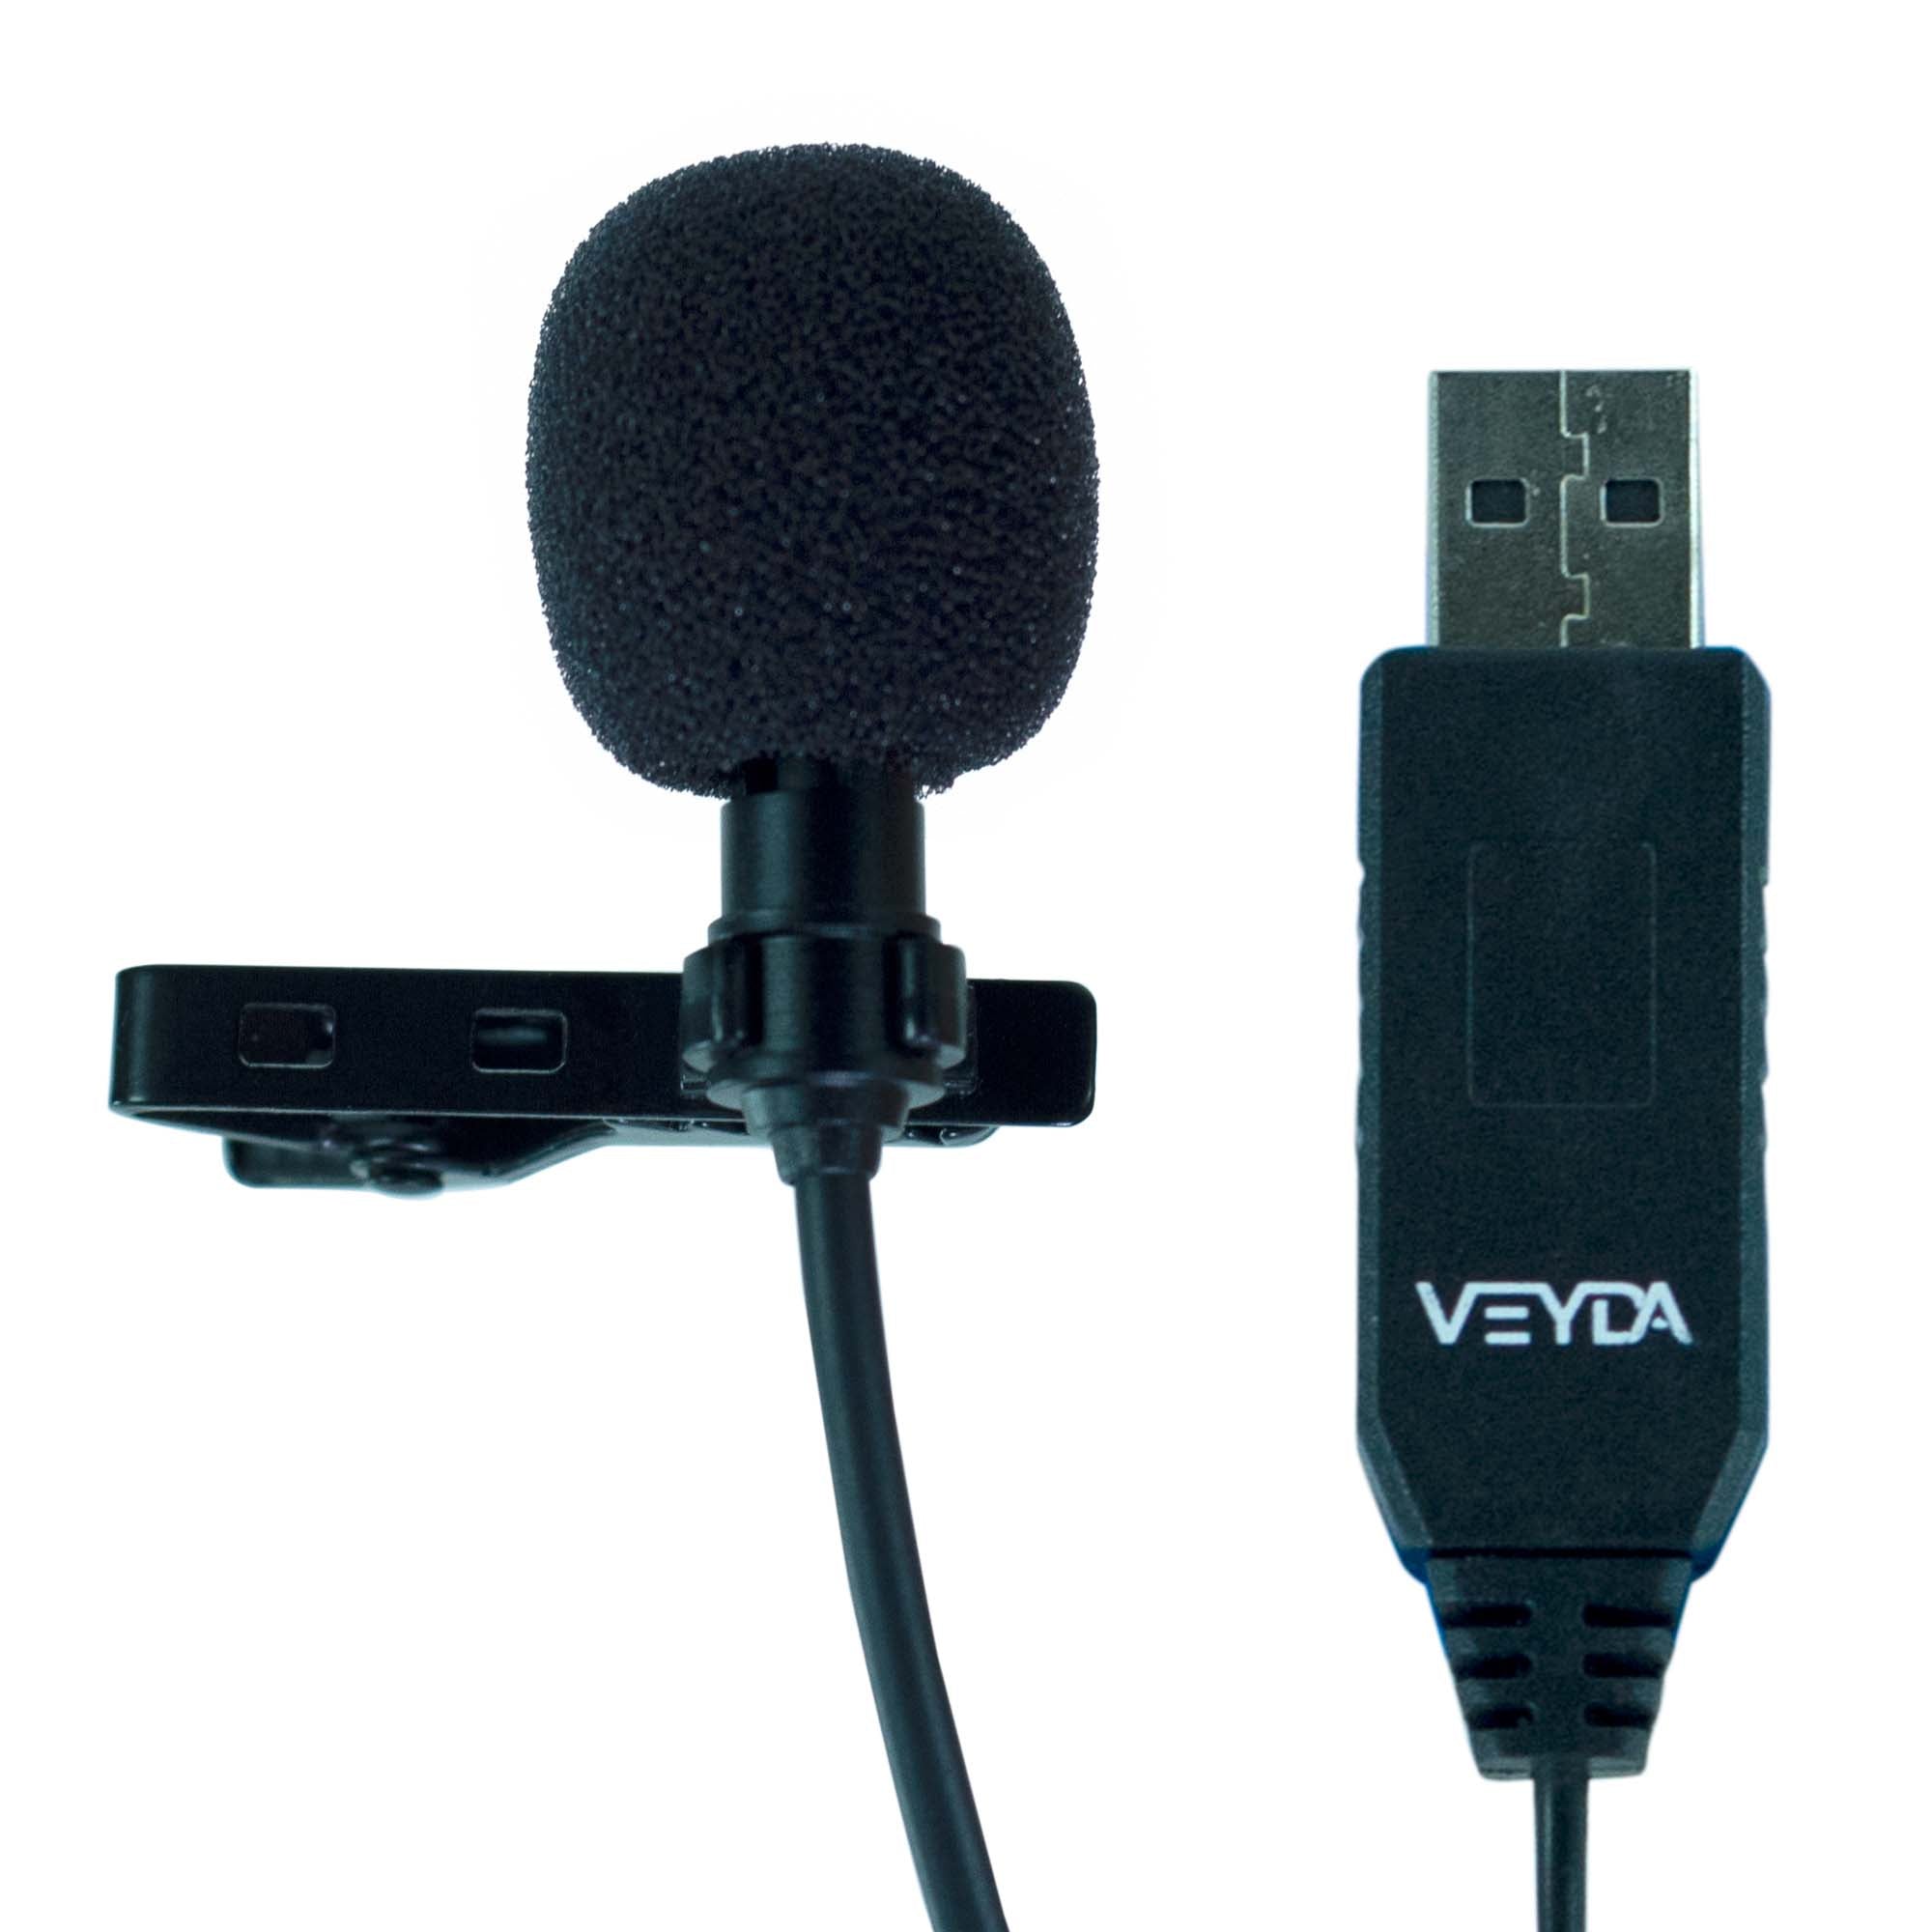 VEYDA VD-LU1 USB LAVALIER  MICROPHONE - CamCaddie.com